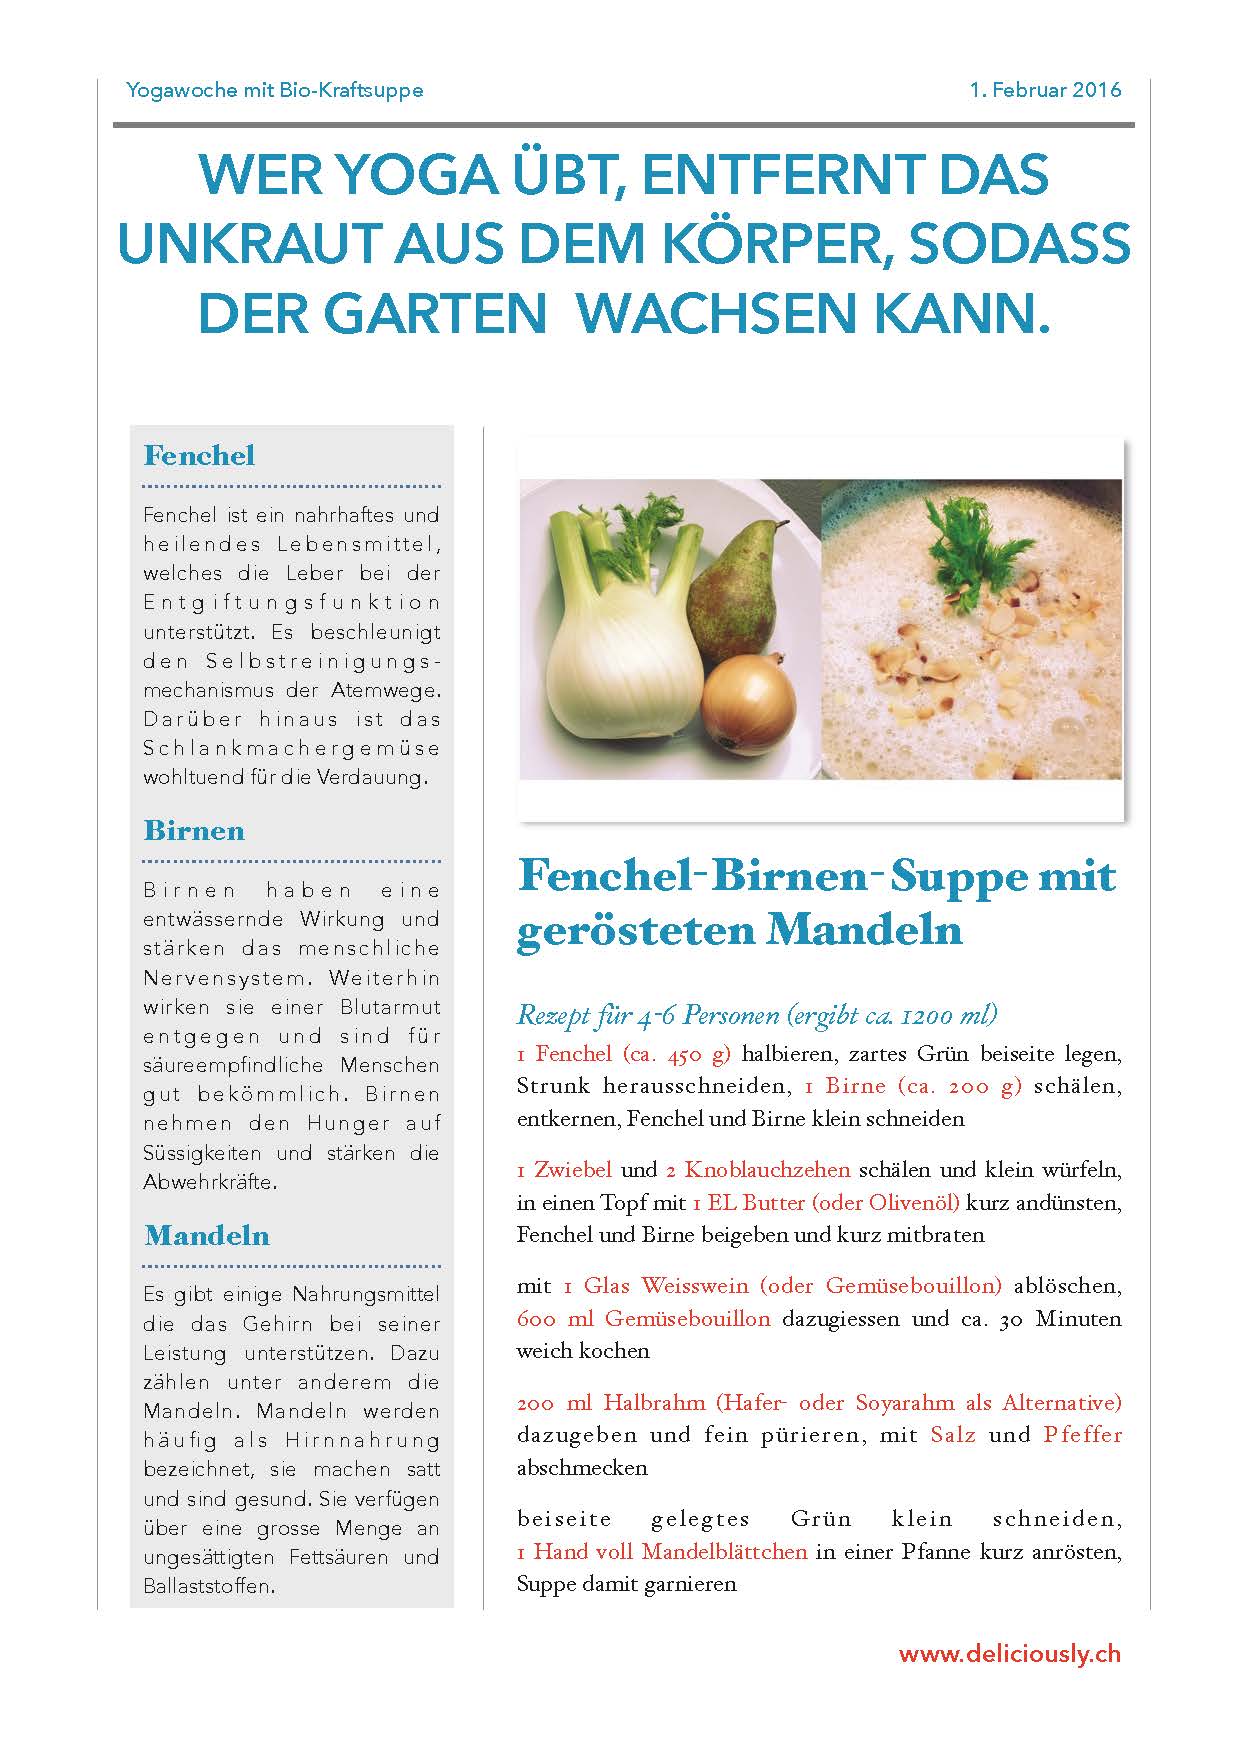 Fenchel-Birnen-Suppe